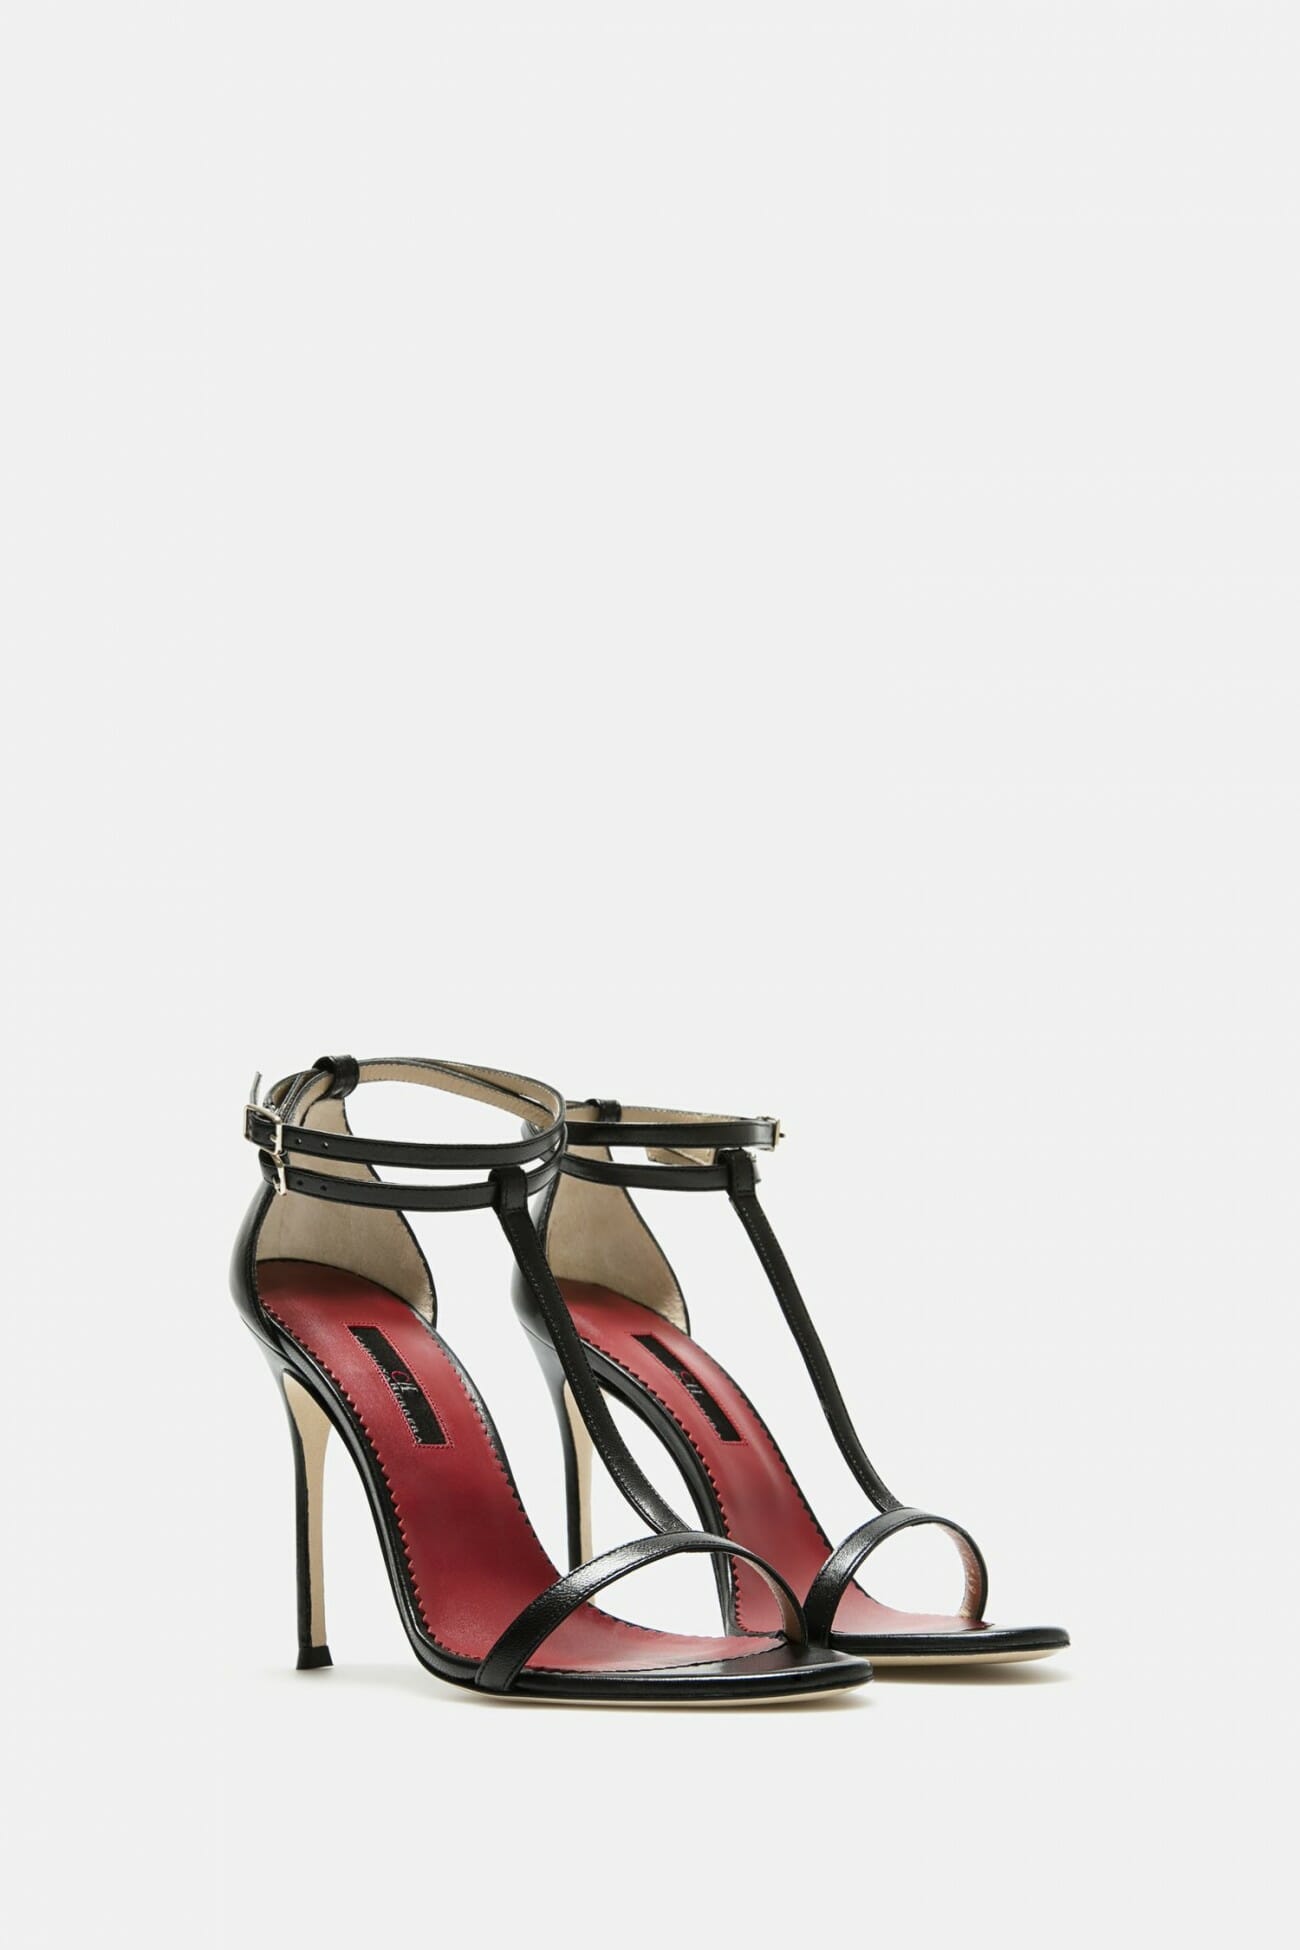 Shoe 02 Carolina Herrera